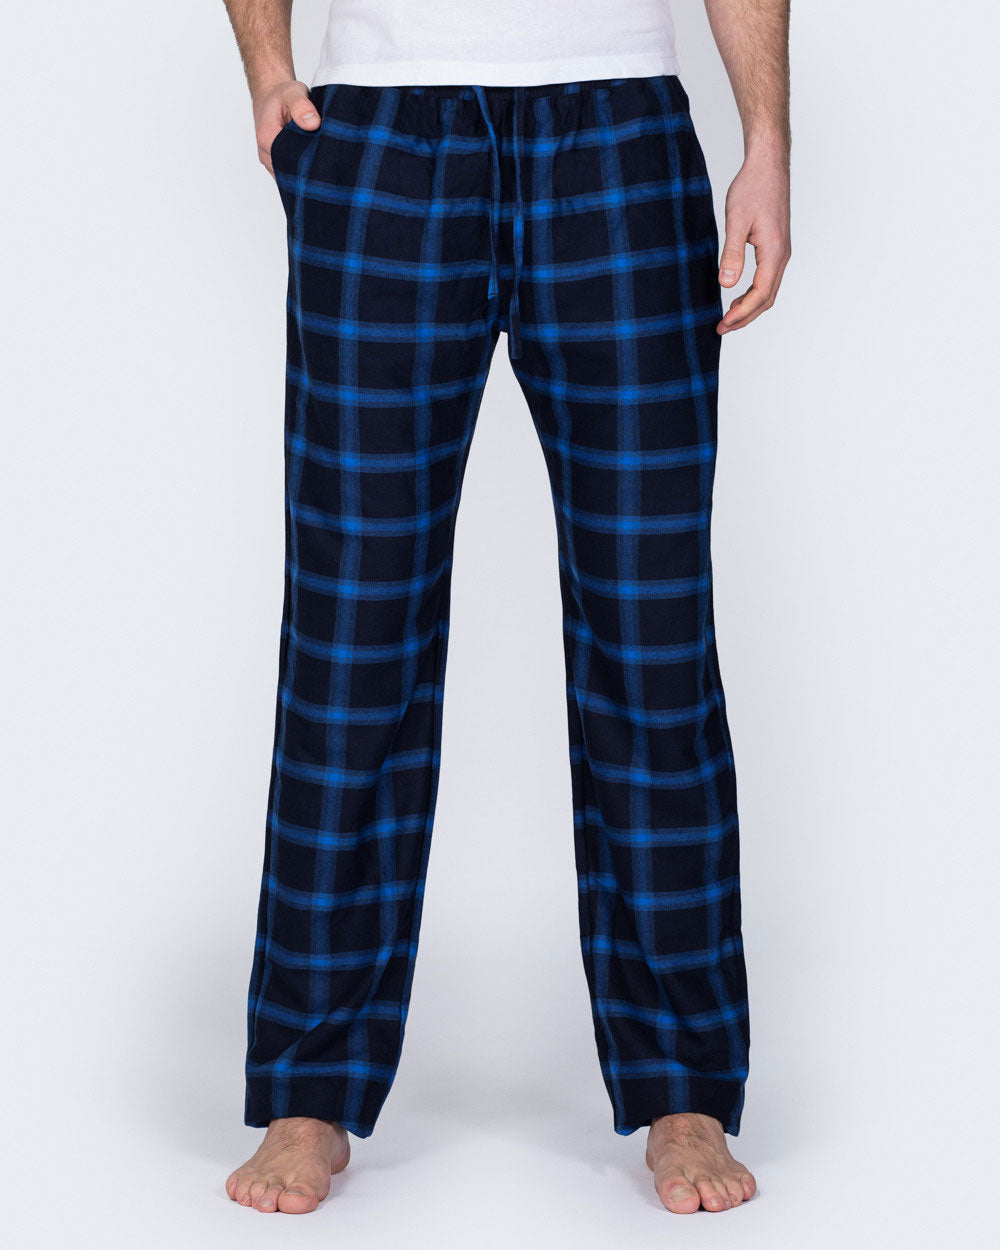 2t Tall Regular Fit Pyjama Bottoms (navy/blue)